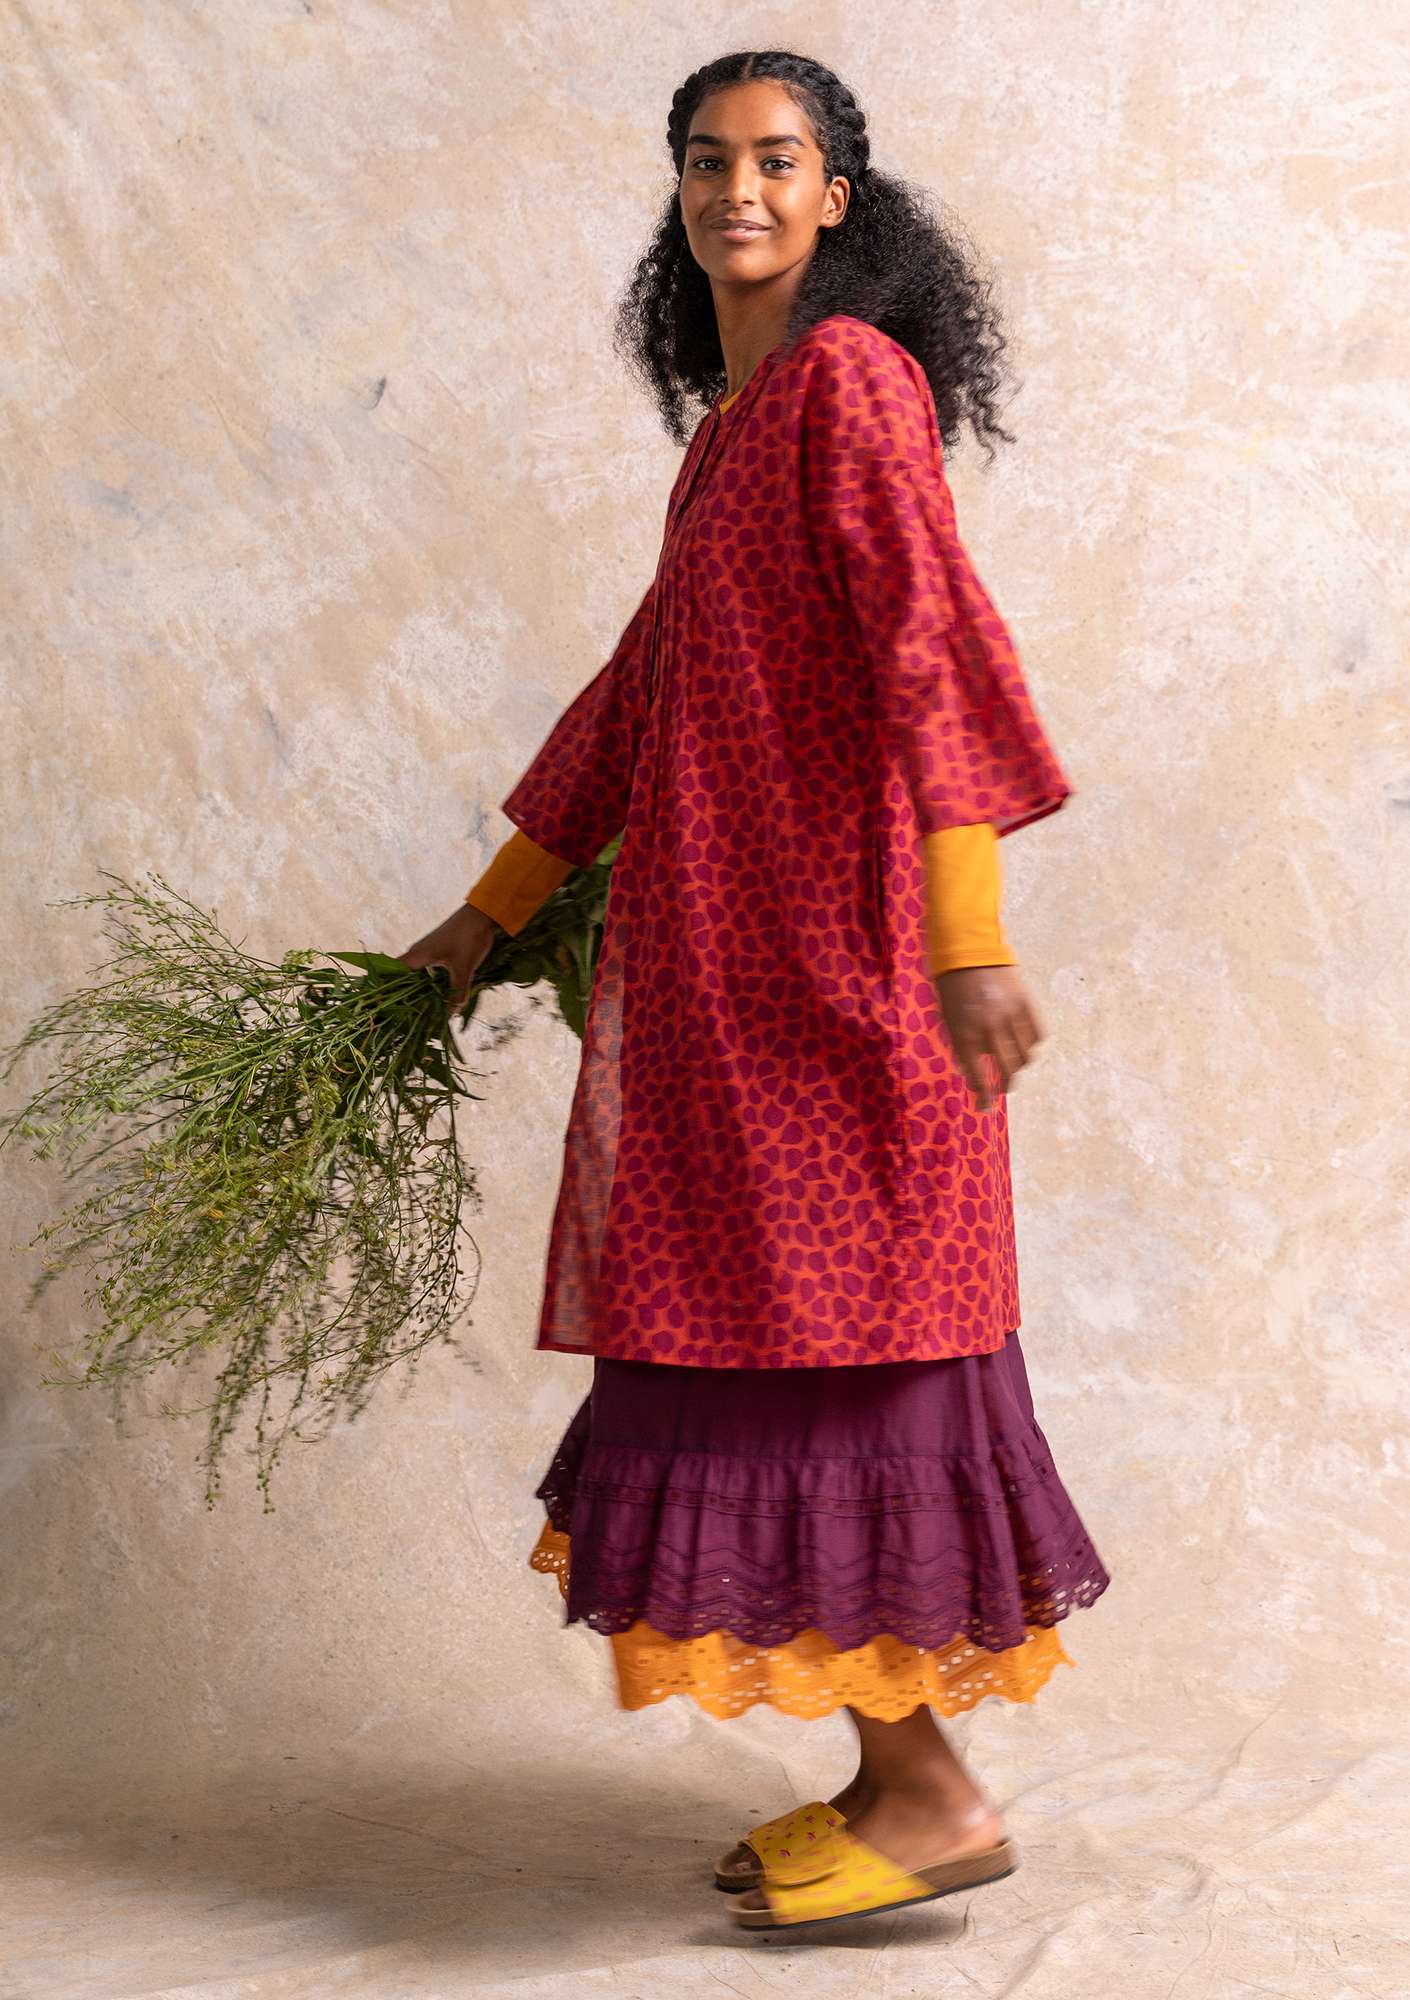 “Serafina” woven organic cotton dress parrot red/patterned